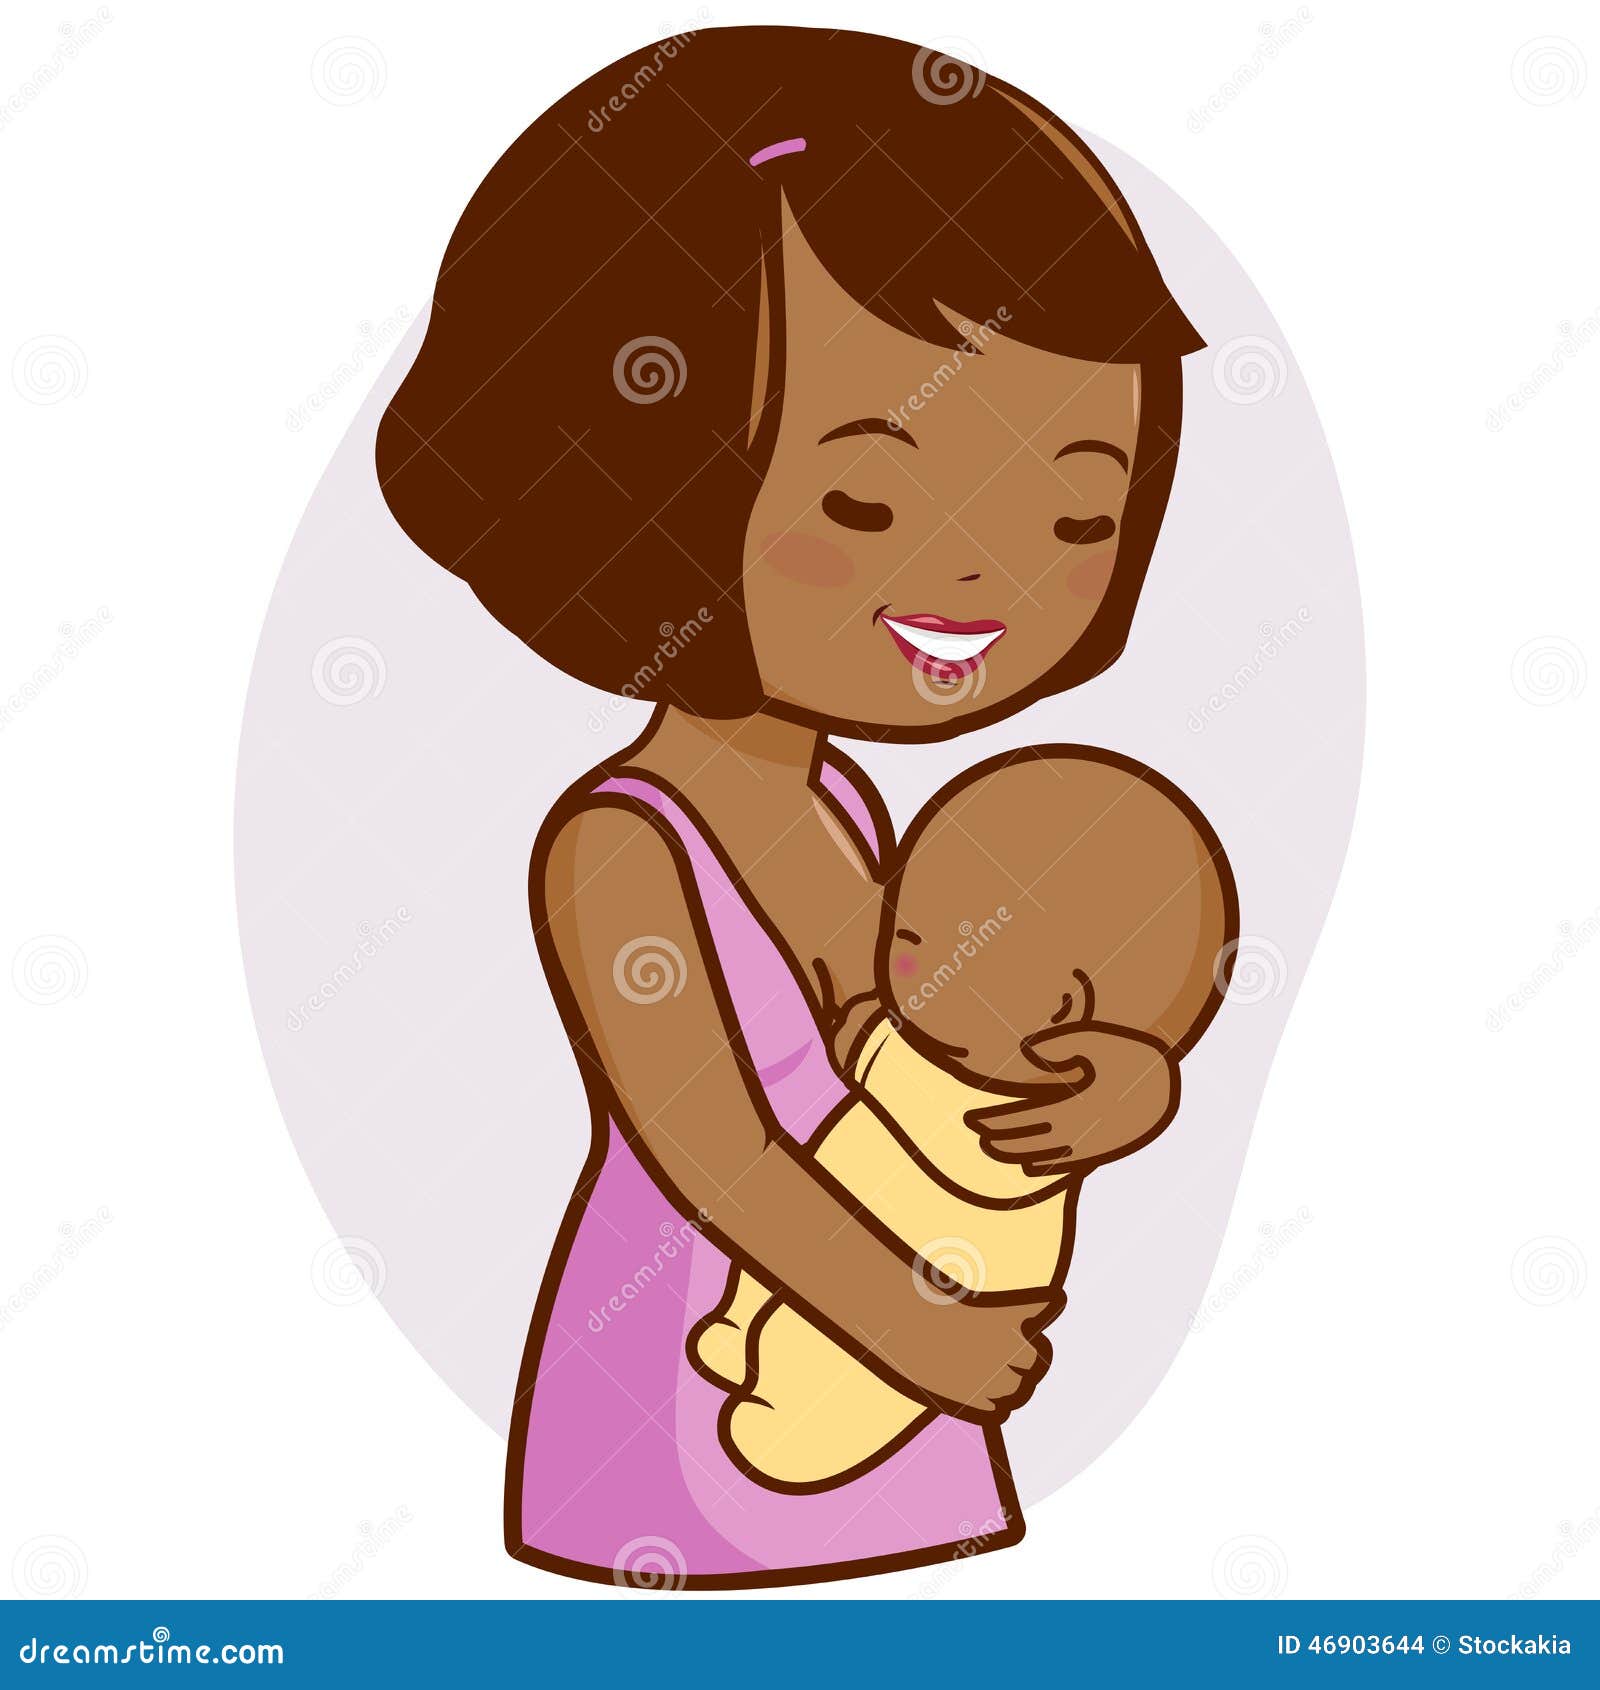 clip art of breastfeeding mother - photo #42